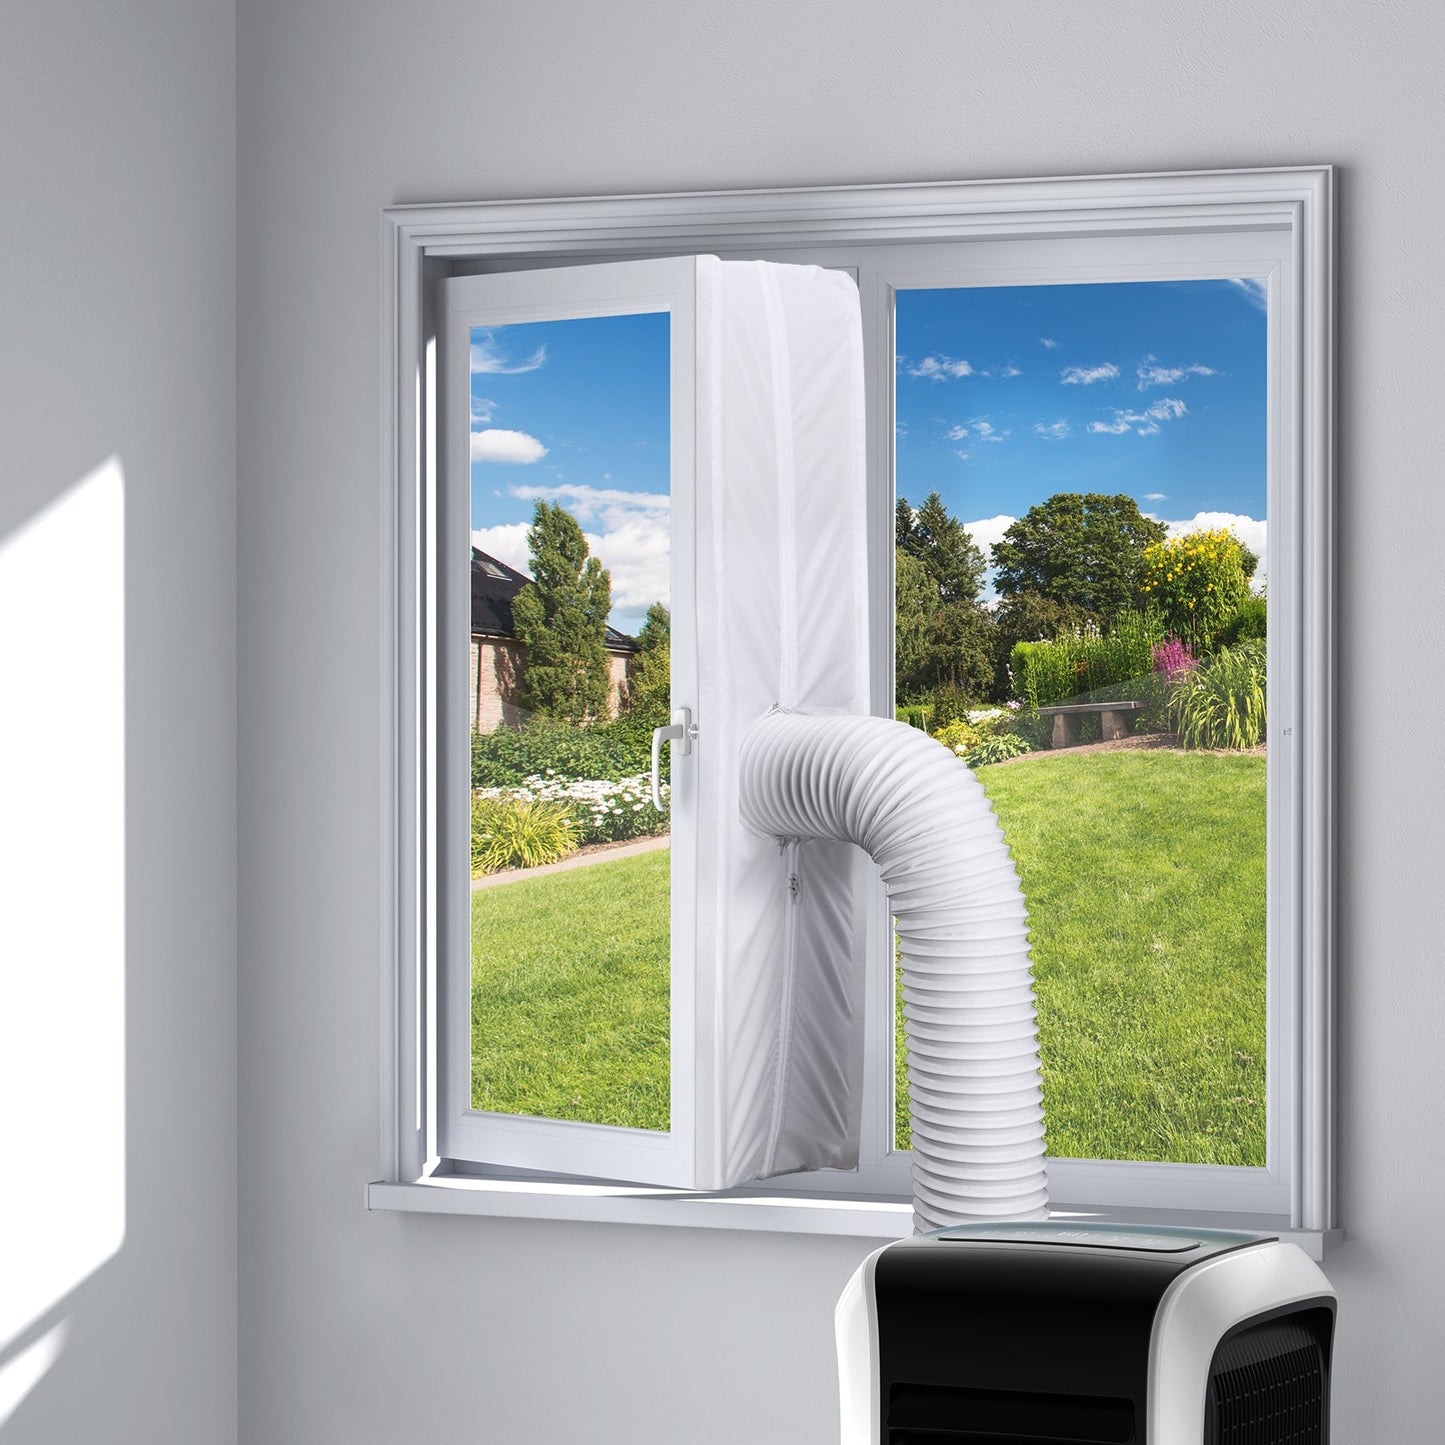 BROSYDA Air Conditioner Window Kit 300cm